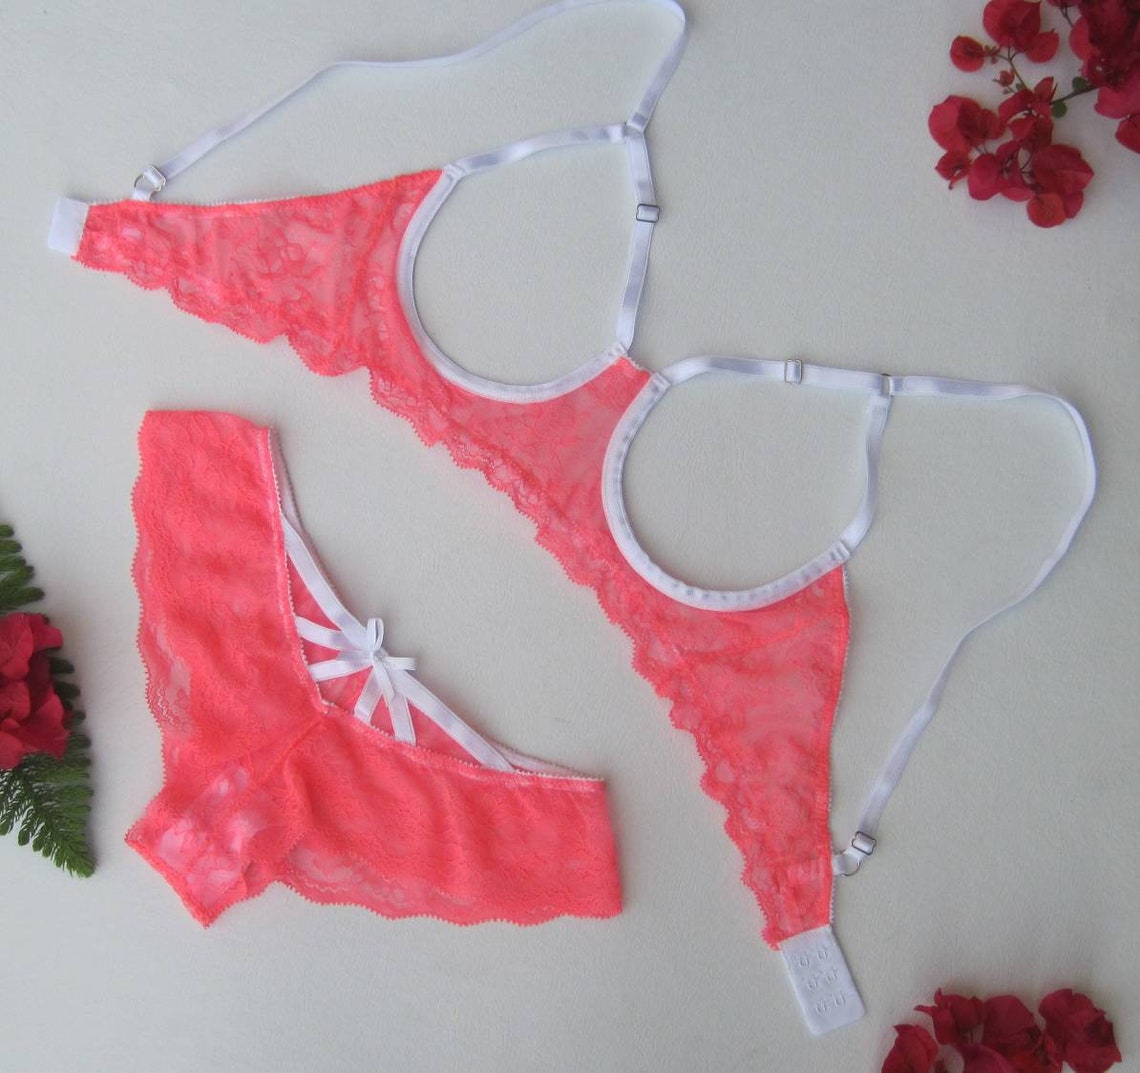 Lingerie set cupless bra plus size lingerie harness | Etsy